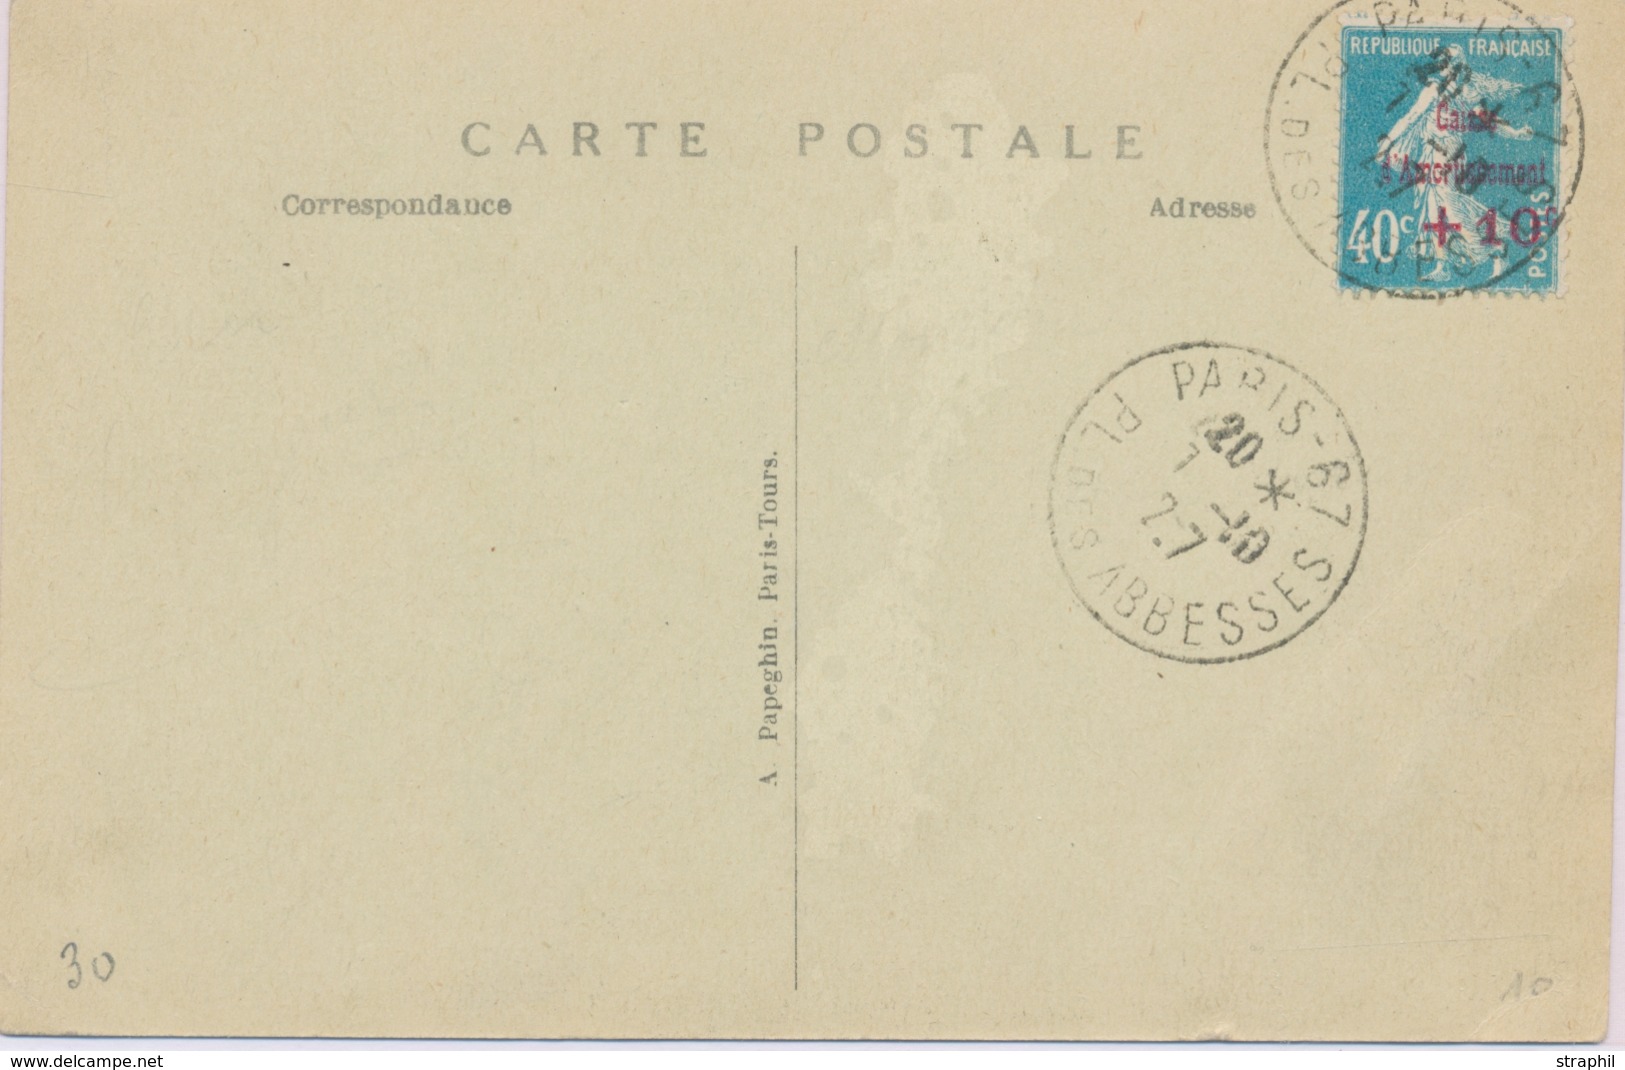 CP CA Sur Lettre - CP - N°249 - Obl. CHARLEVILLE/foire Expo- 10/06/29 - TB - Lettres & Documents